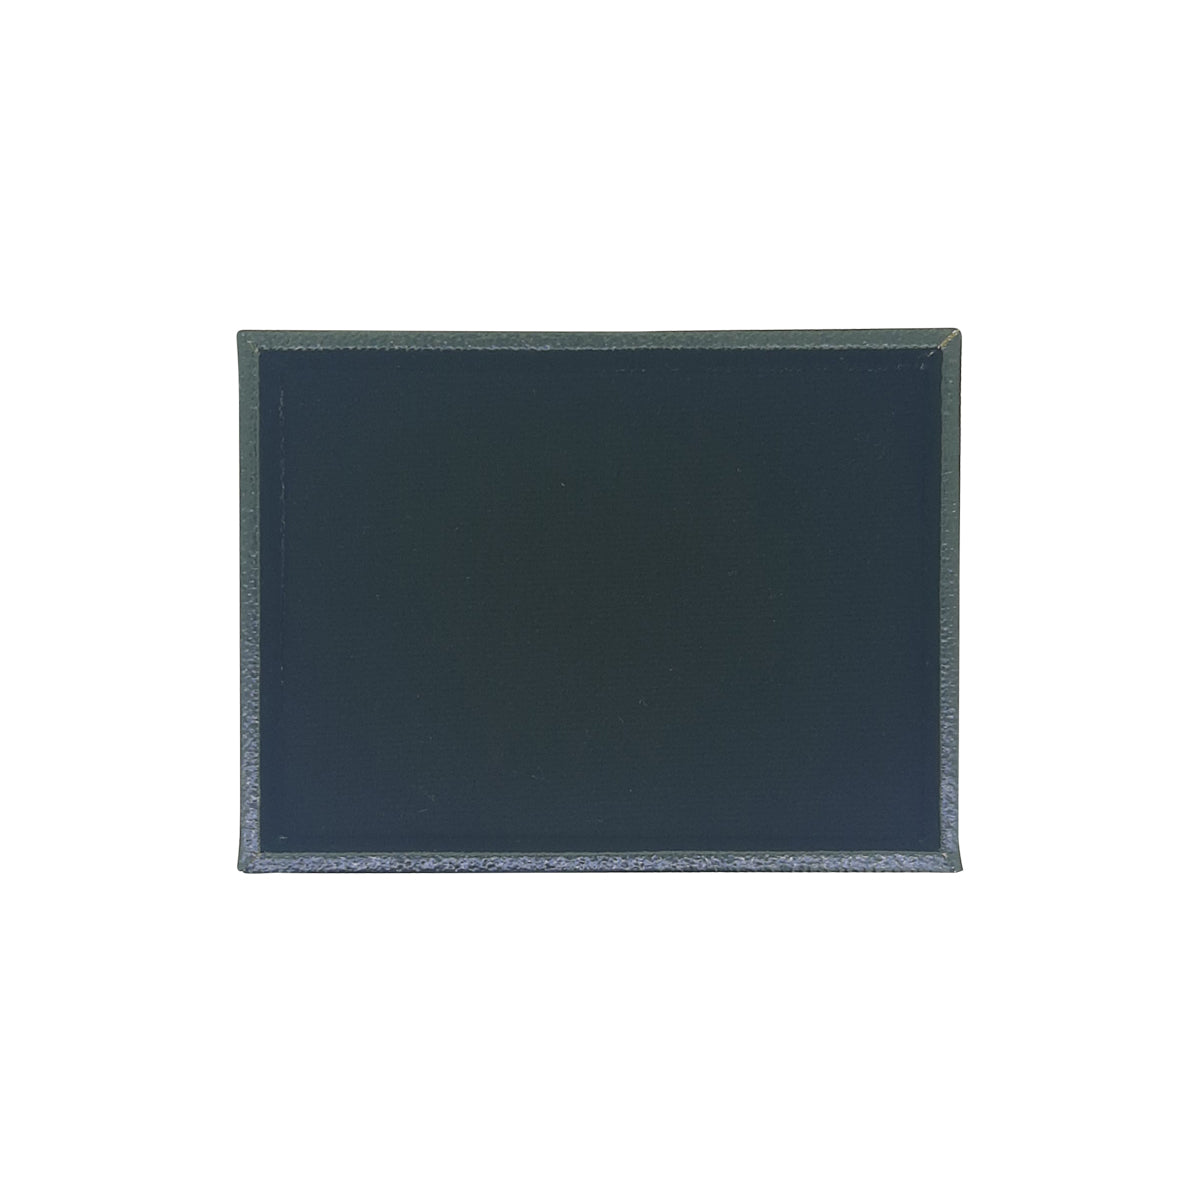 Display Trays Plain-Mini-Black